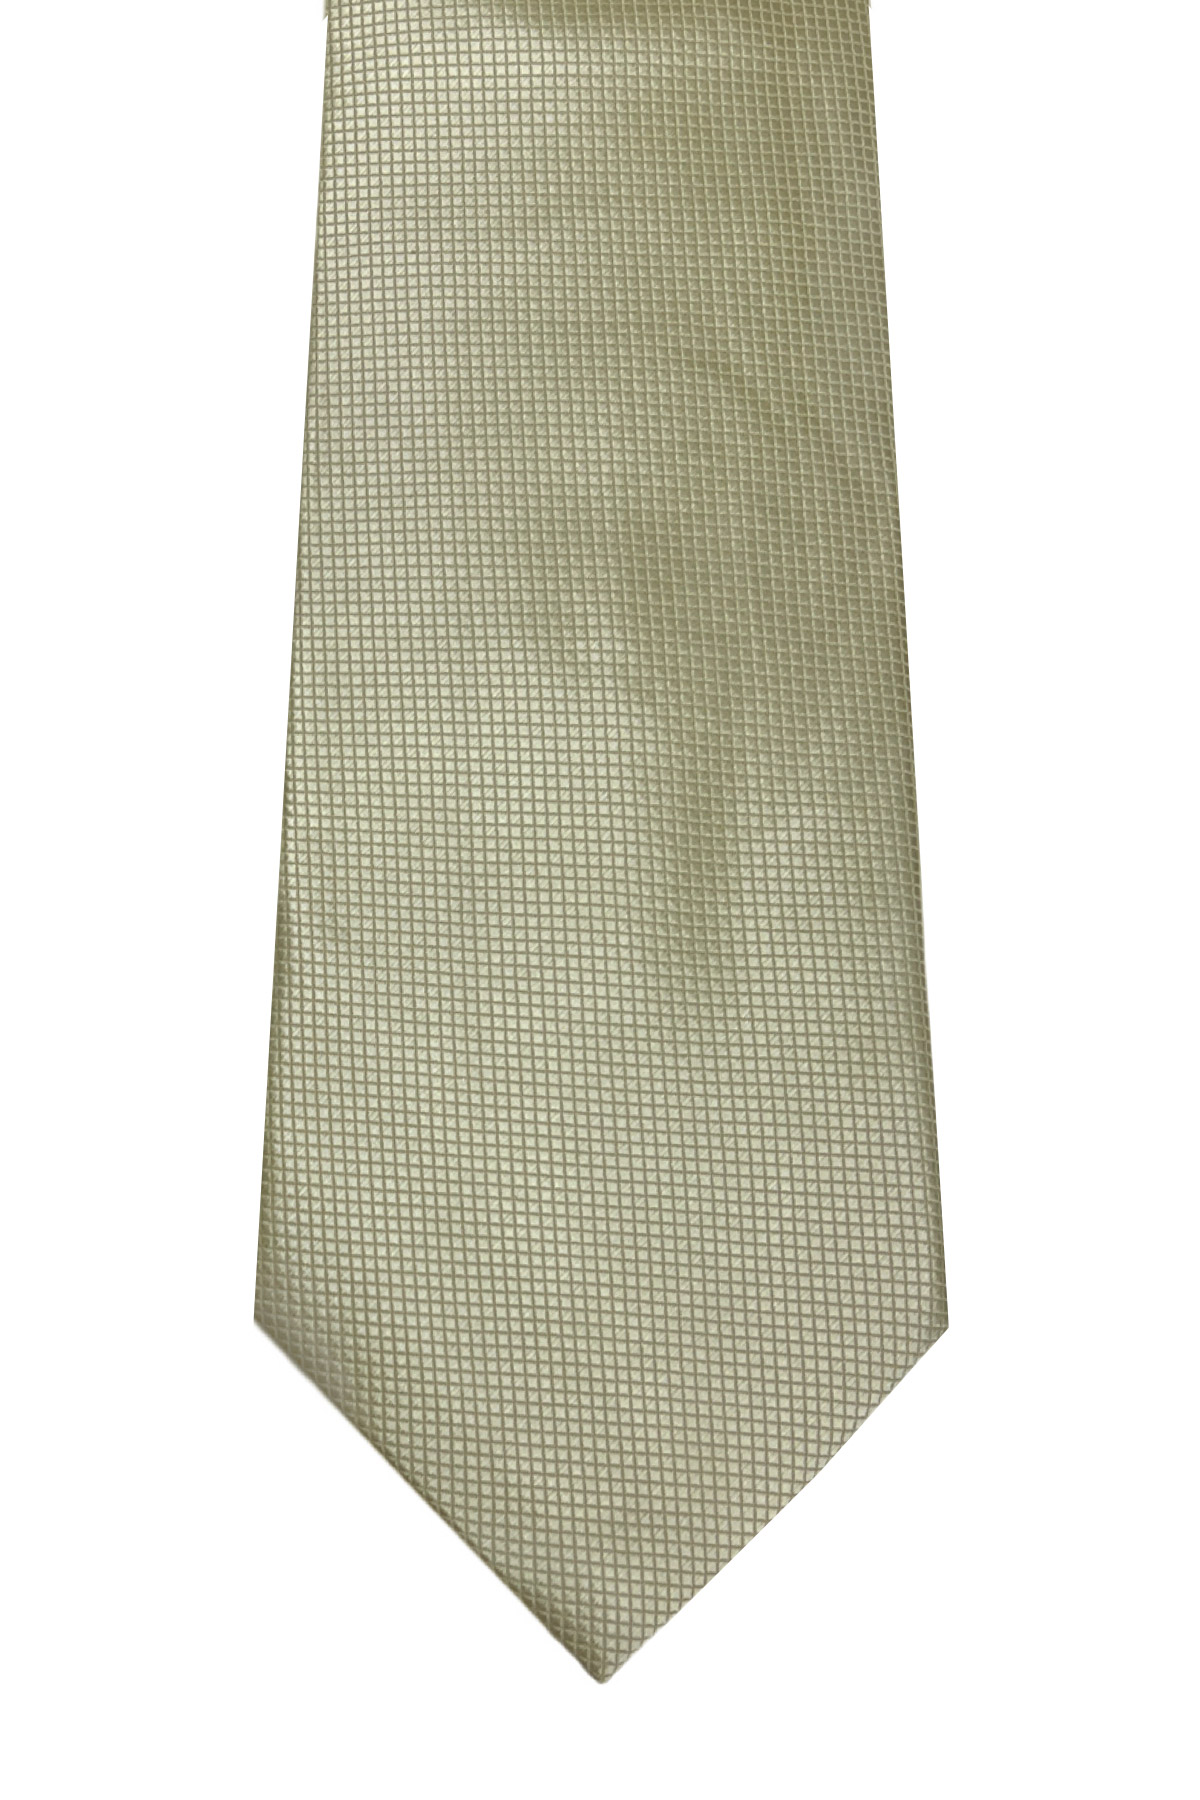 Cravatta uomo seta 8cm tinta unita effetto diamantato da cerimonia elegante